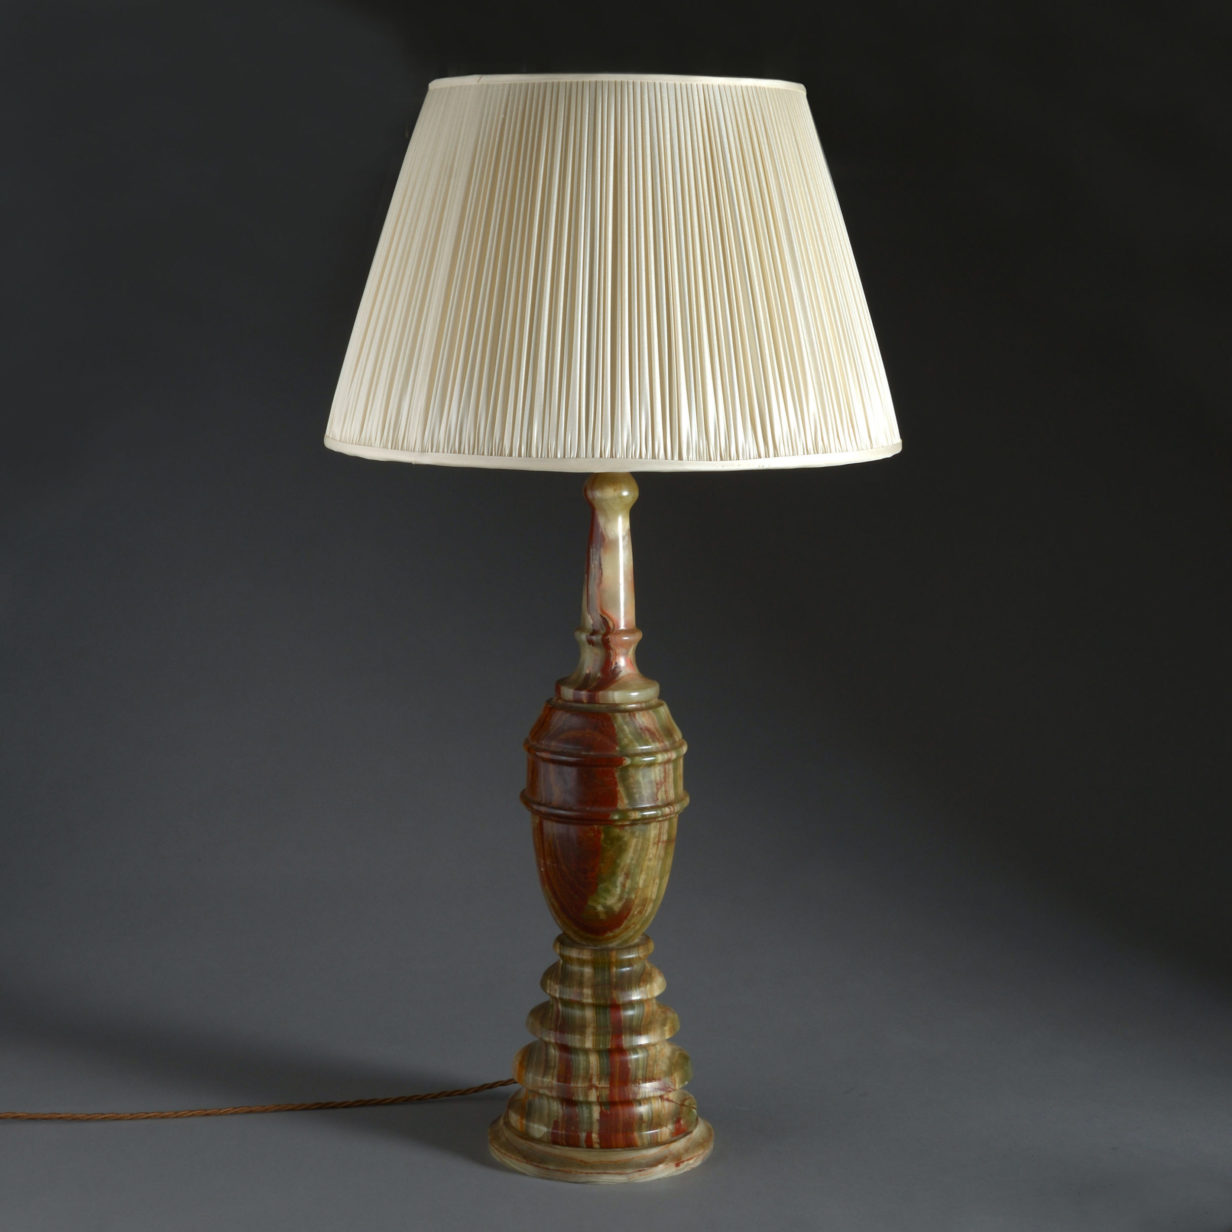 A tall art deco turned onyx table lamp